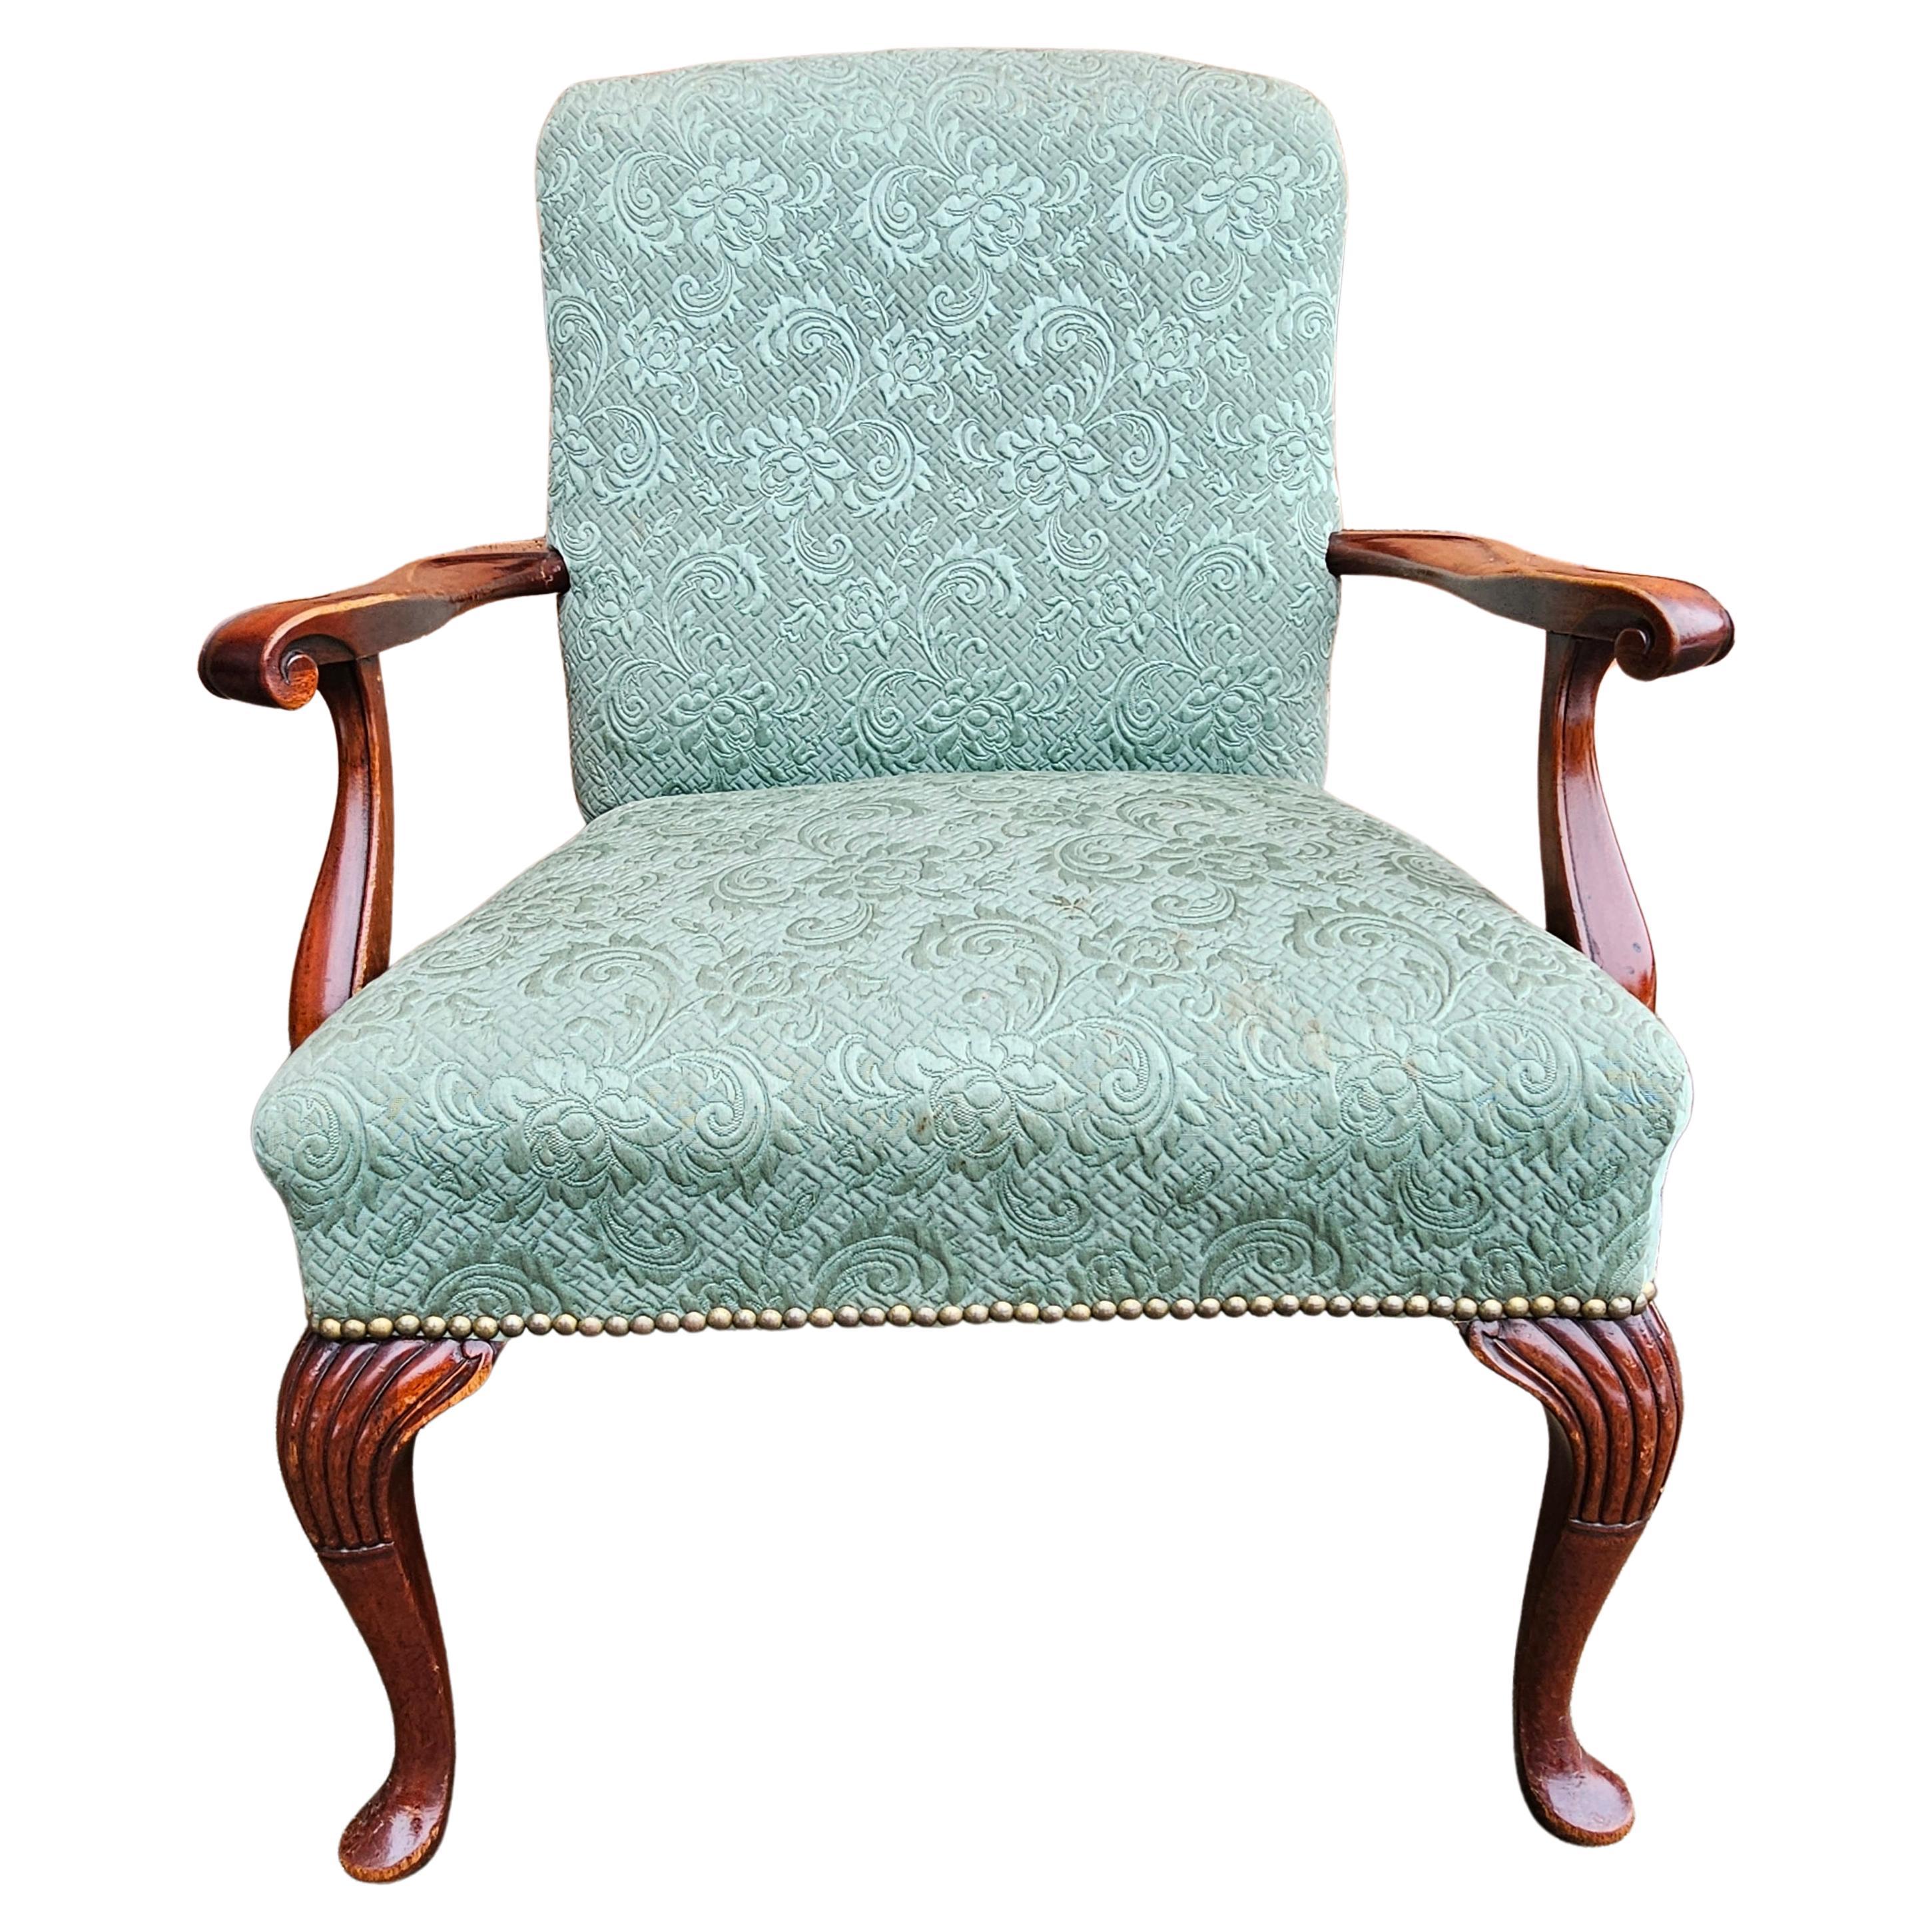 Mitte 20. Jahrhundert Queen Anne Style Mahagoni gepolstert Sessel im Angebot